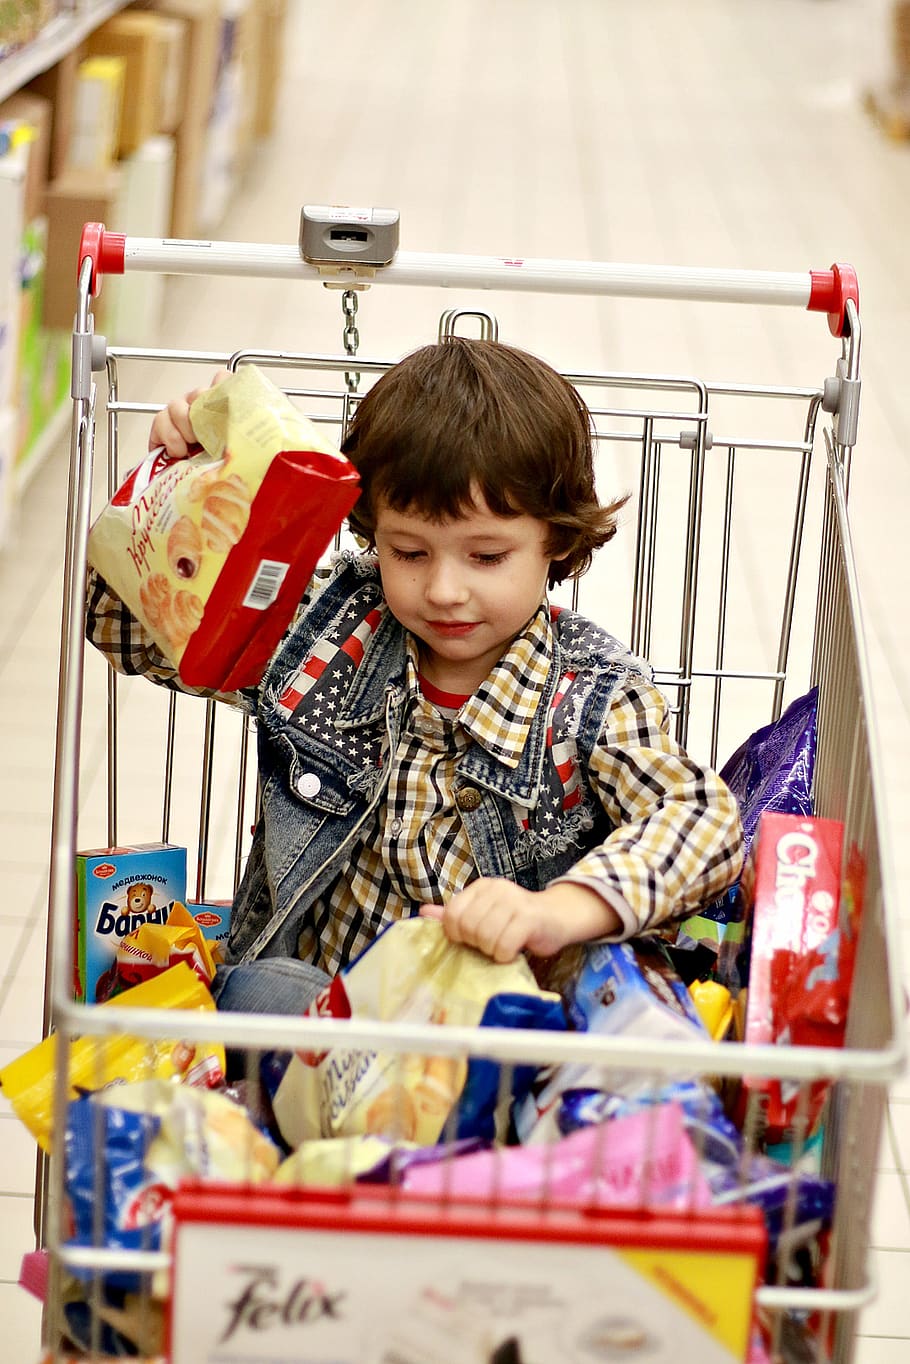 toko, produk, membeli, boy in the basket, boy in the cart, produk bayi, Permen, cokelat, manis, pencuci mulut